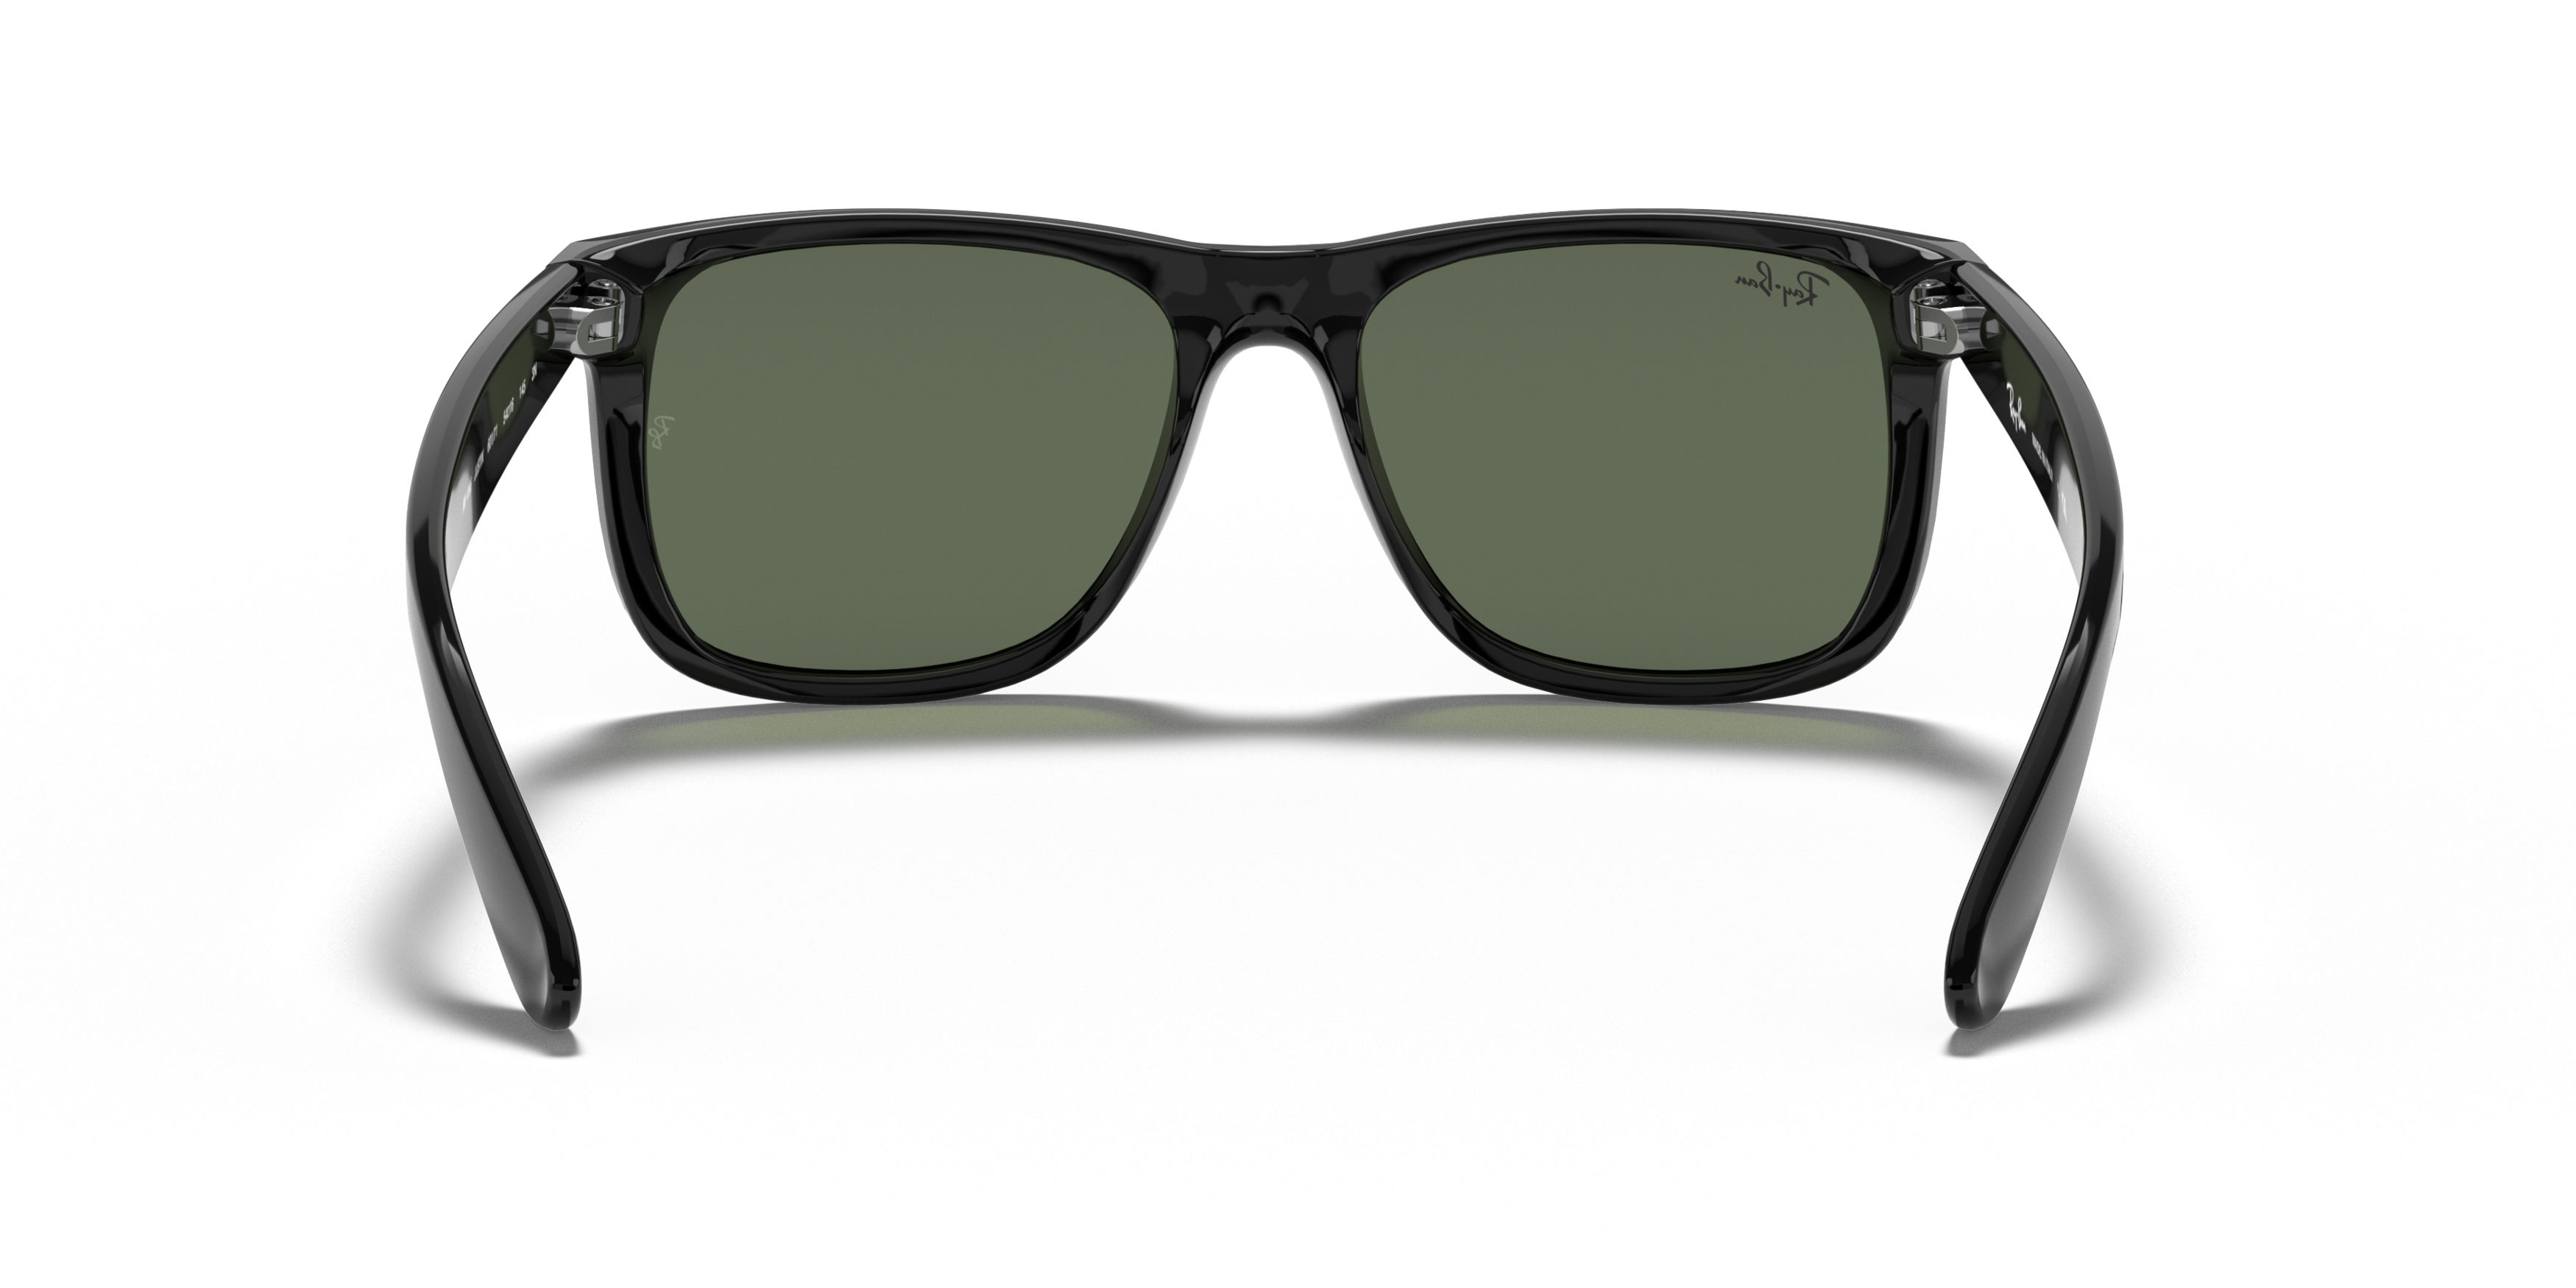 Detail02 Ray-Ban Justin RB 4165 (601/71) Sunglasses Green / Black